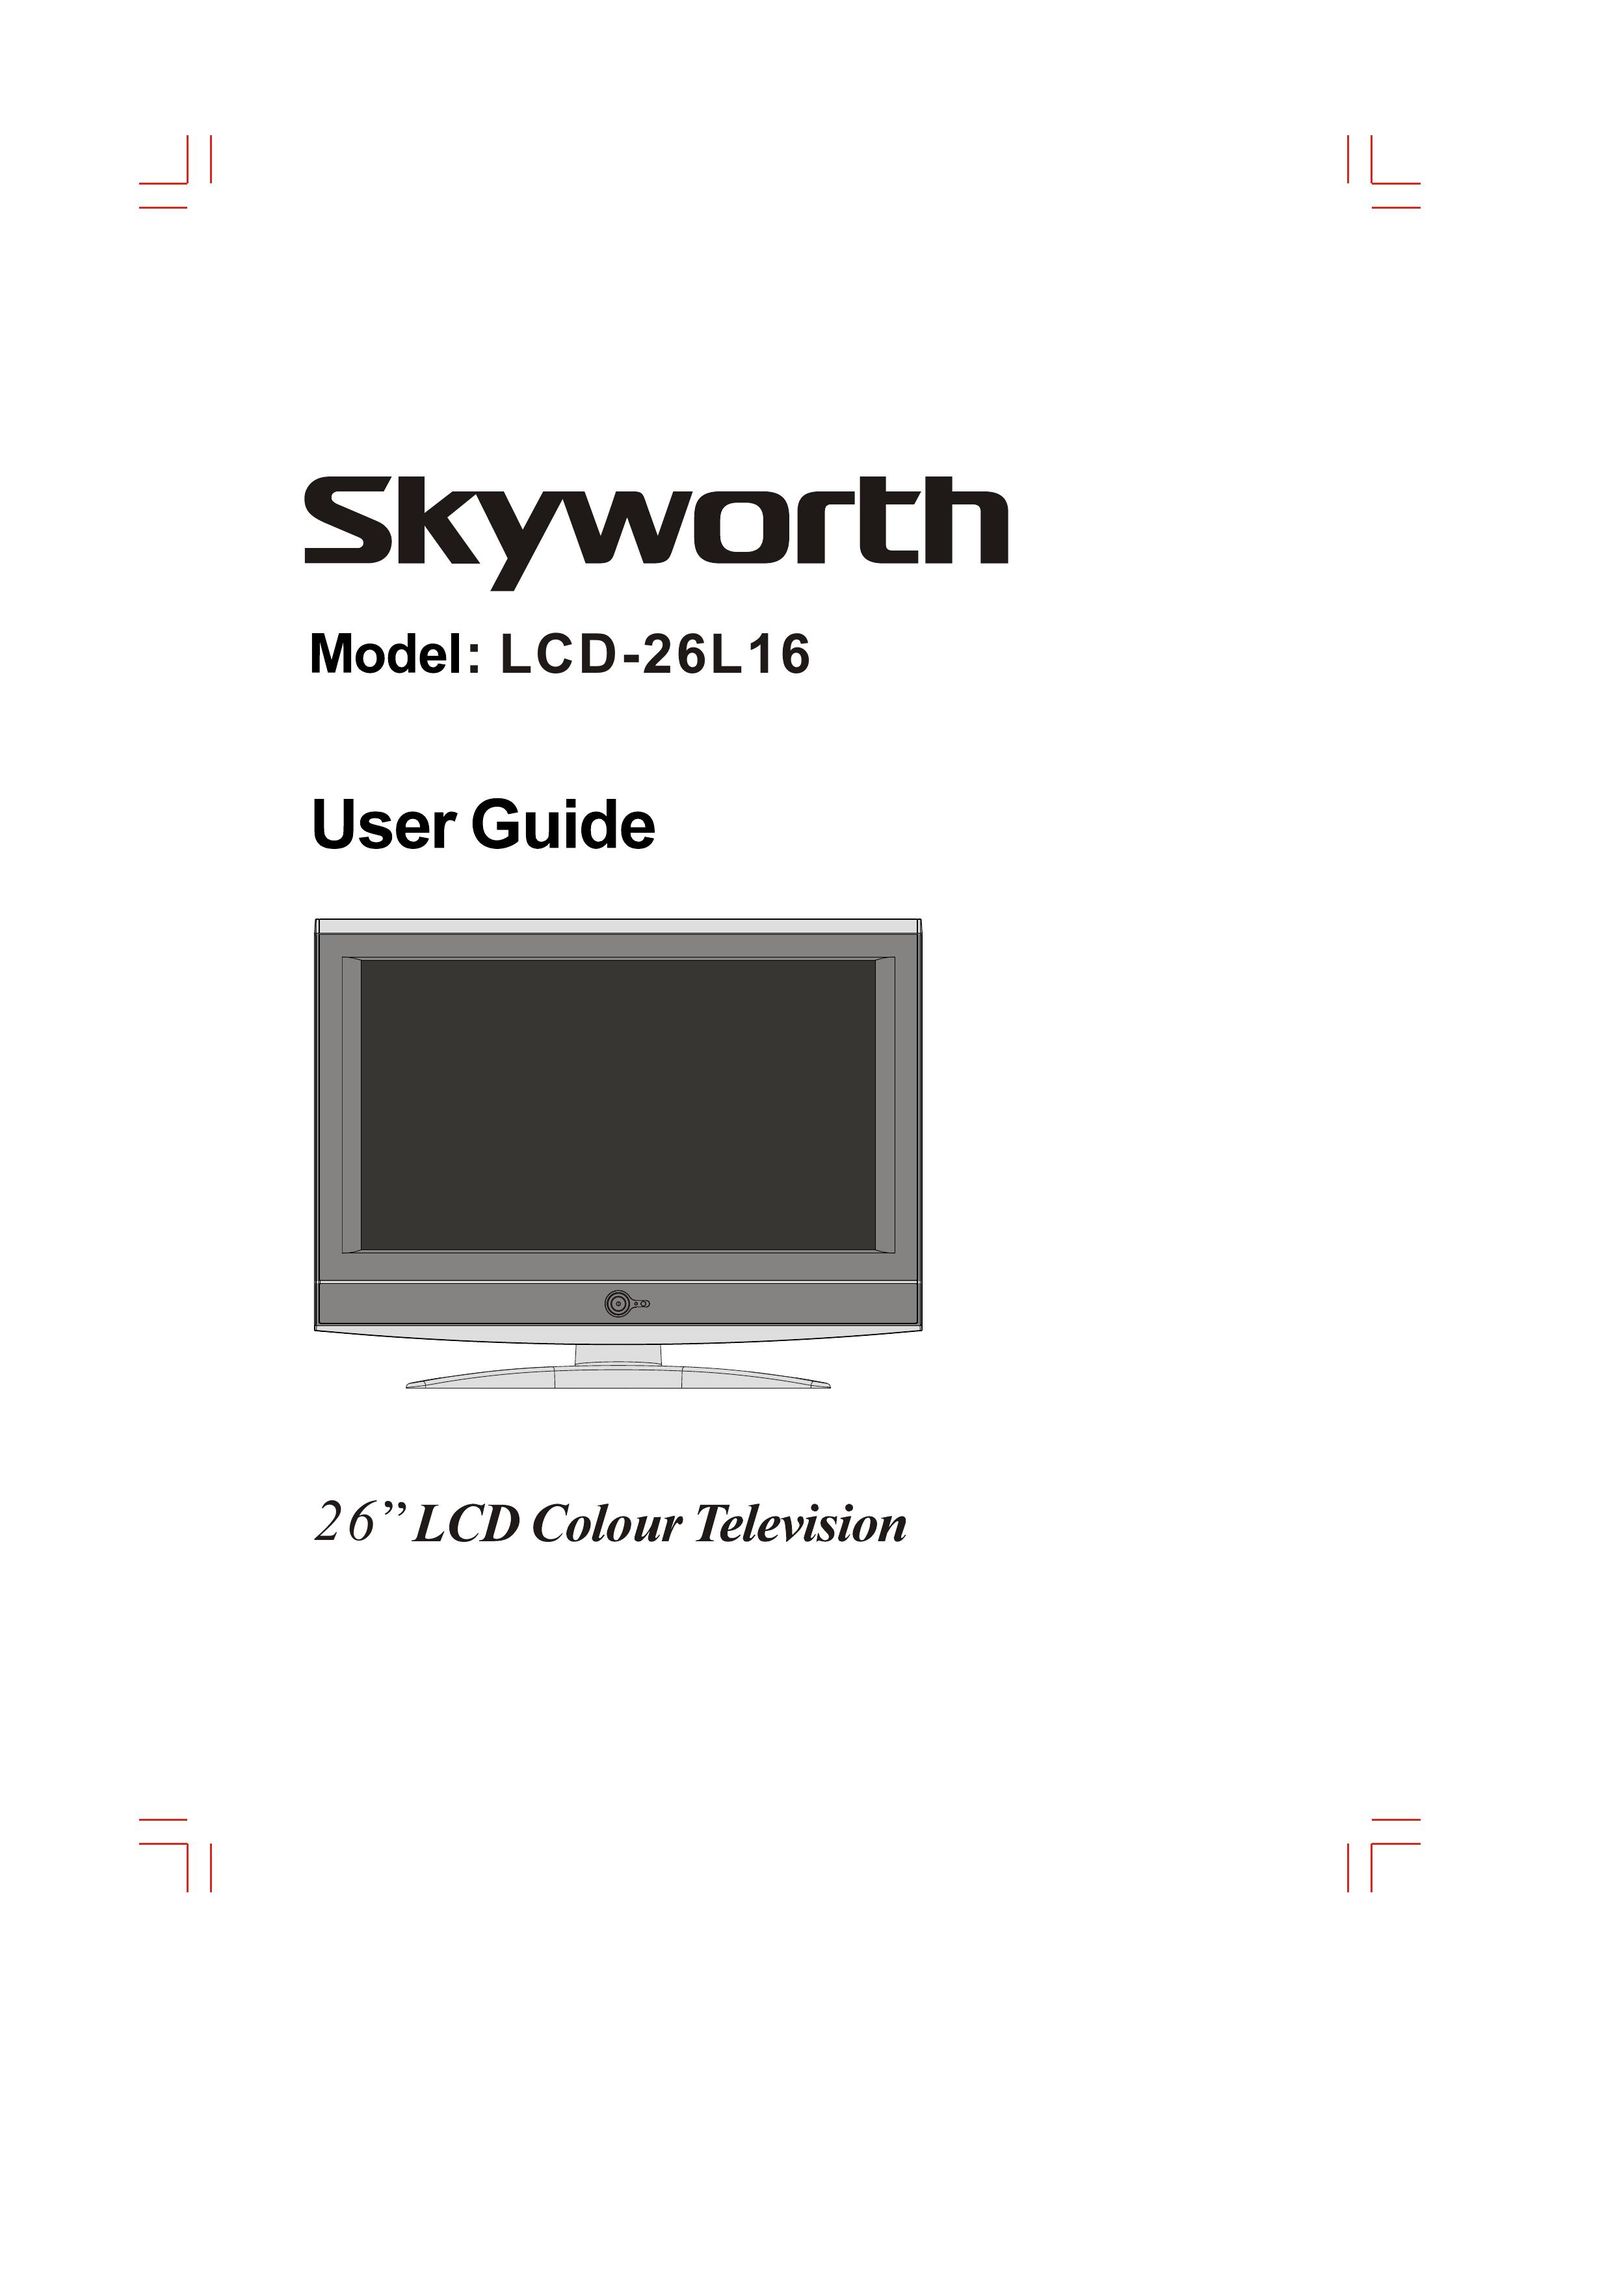 Skyworks LCD-26L16 Flat Panel Television User Manual